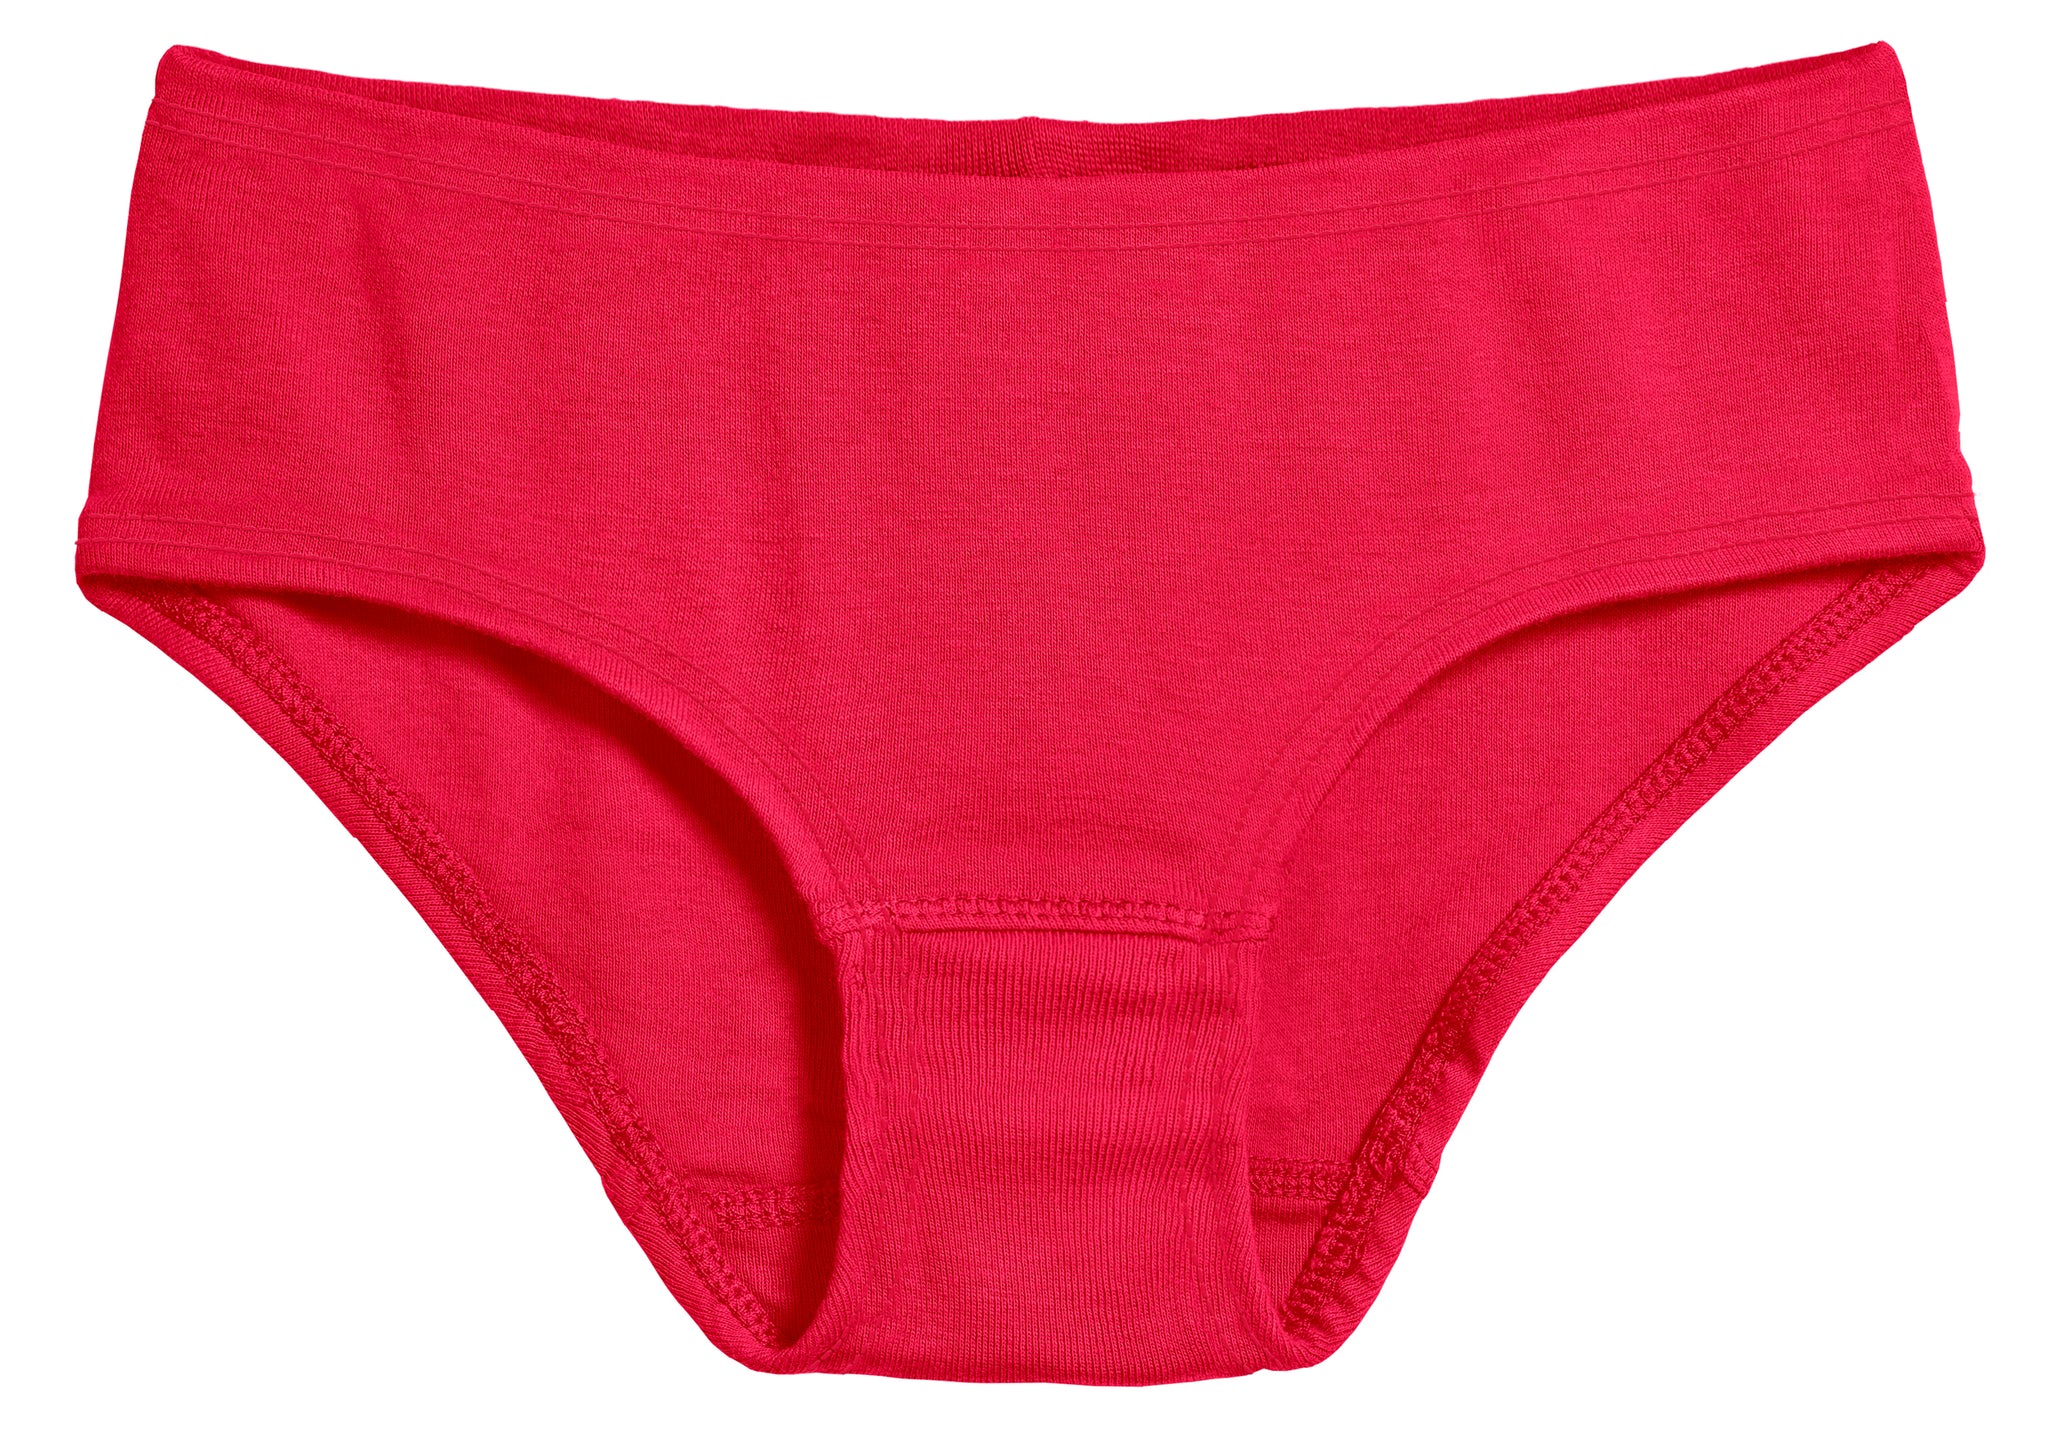 10 PCS Free Size Candy Colors Sexy Women Comfort Cotton Underwear Panties  (Random Colors) 